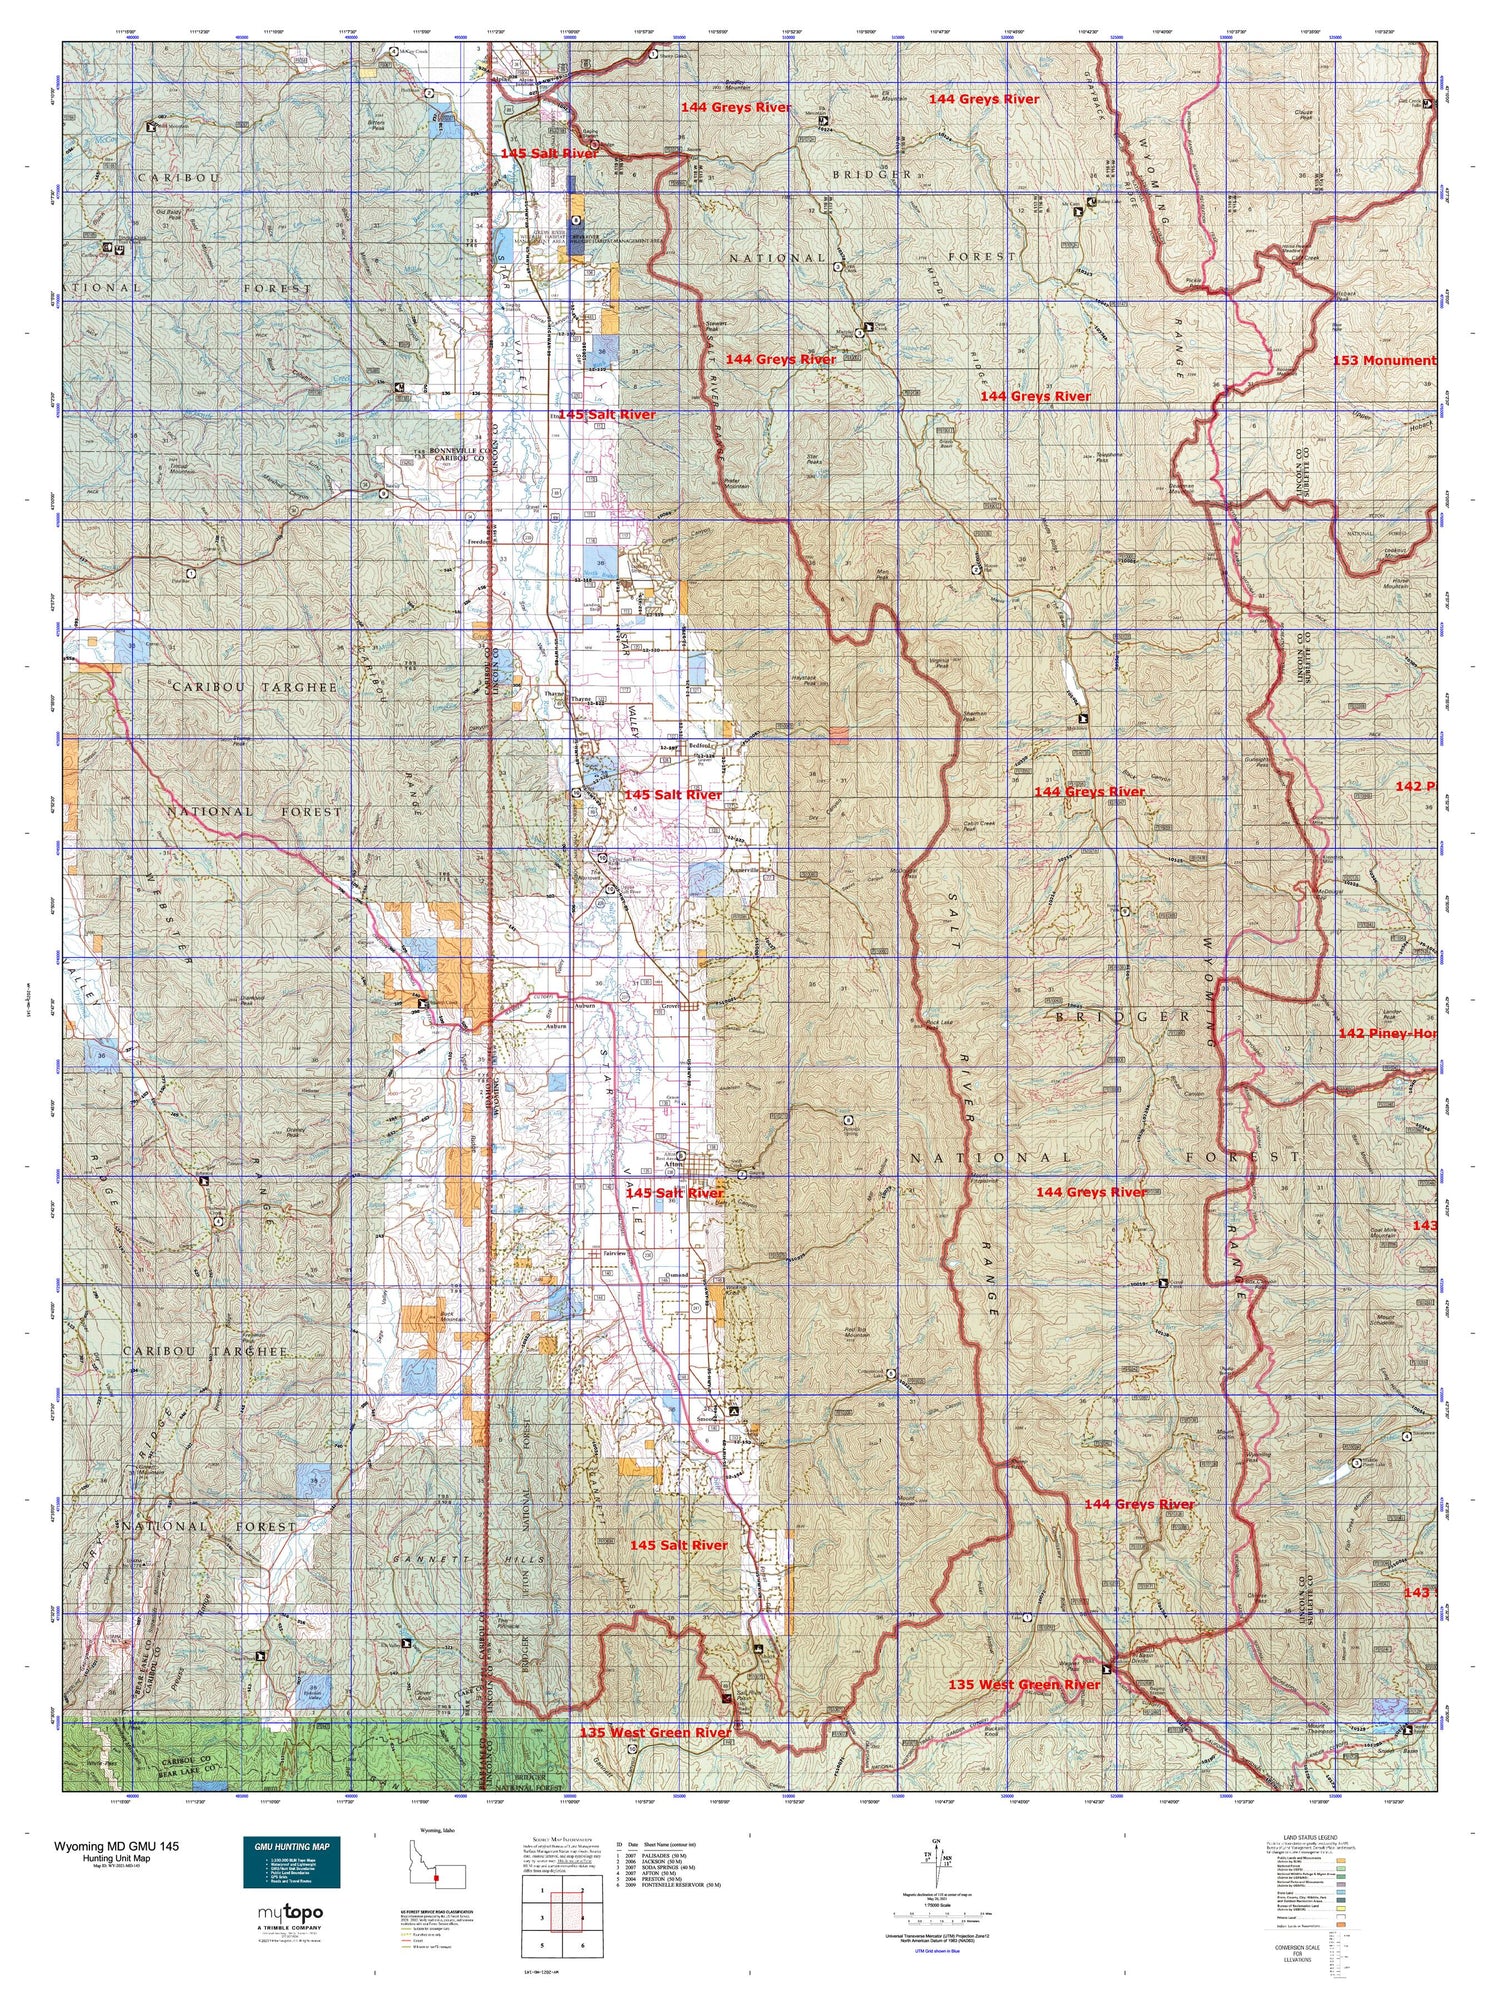 Wyoming Mule Deer GMU 145 Map Image